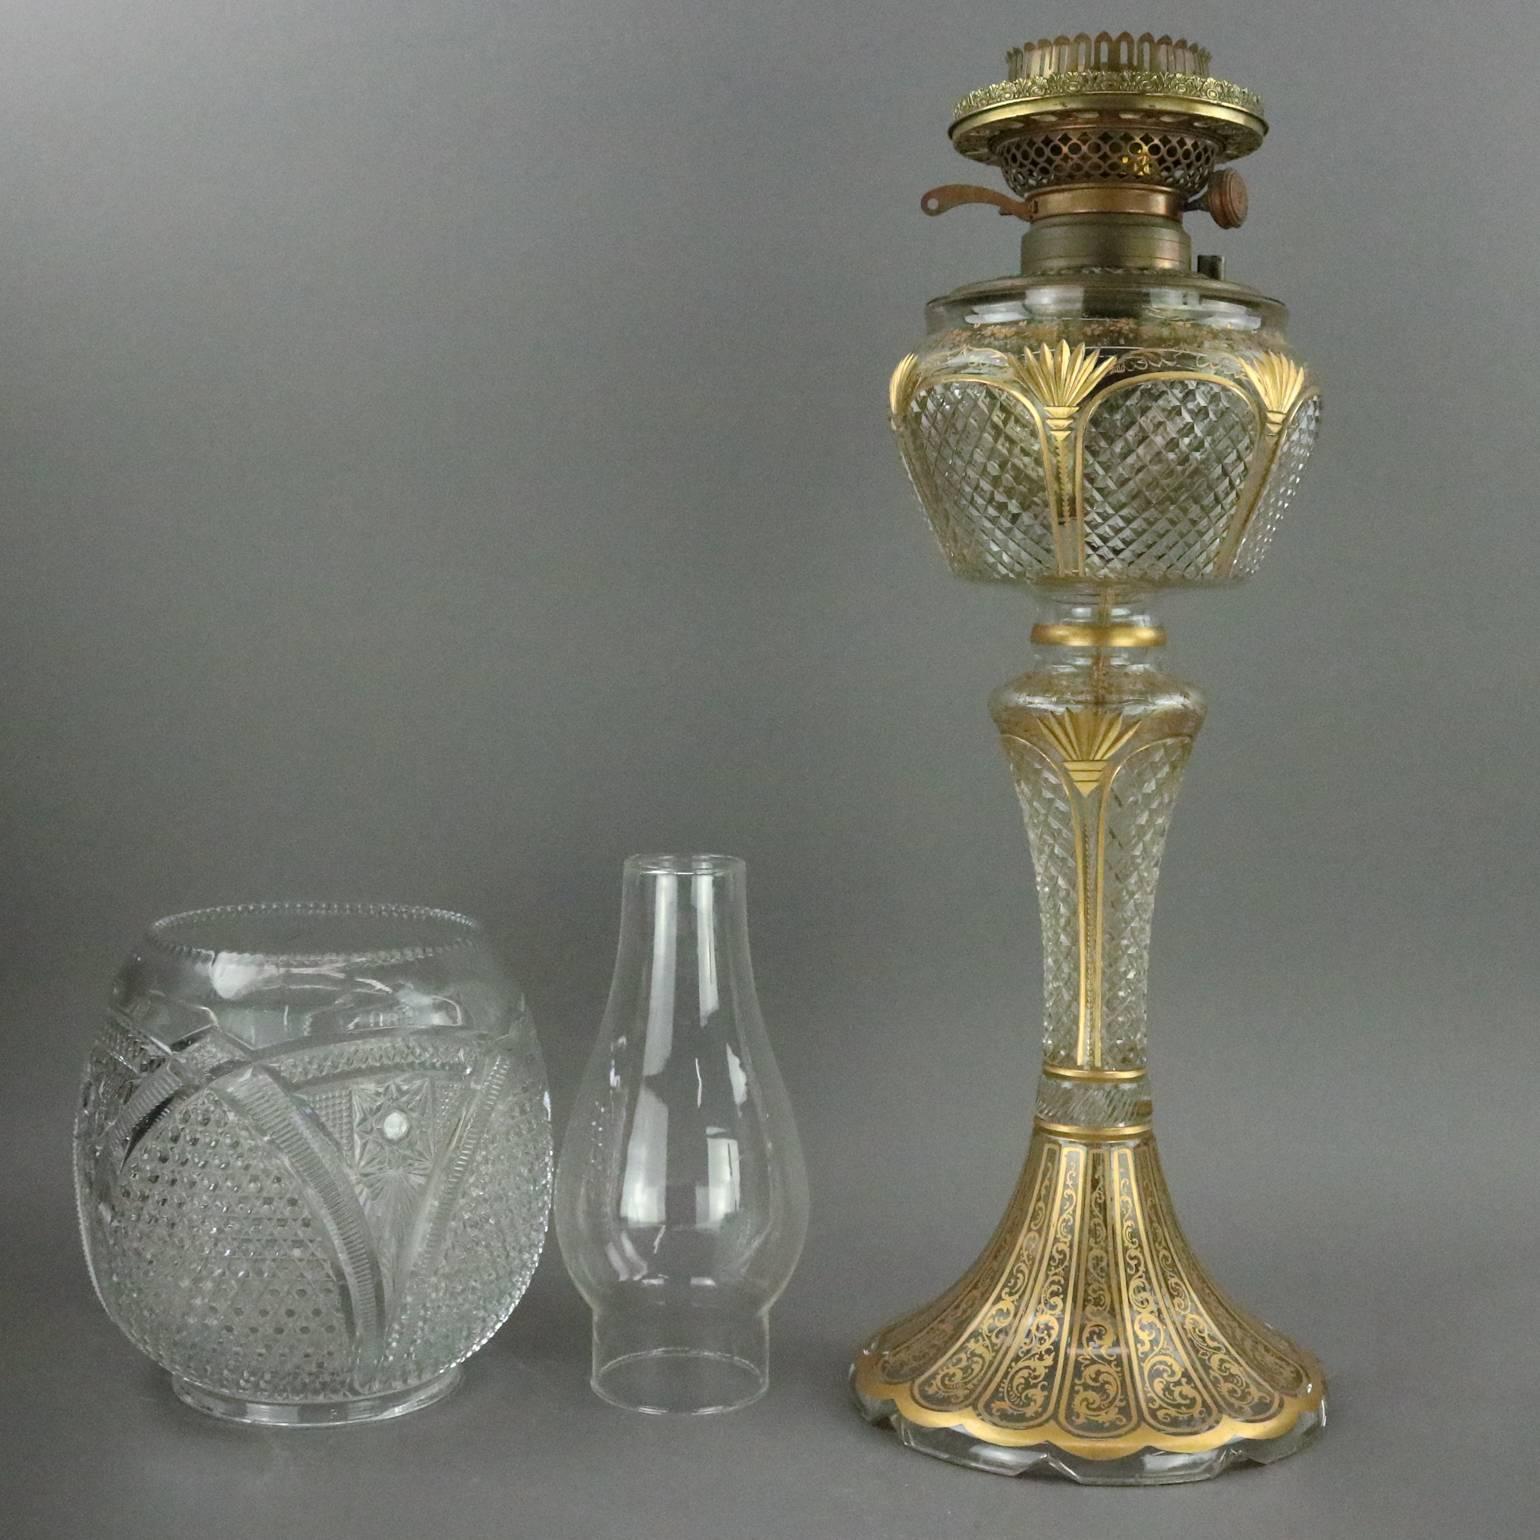 American Antique Bradley & Hubbard Cut-Glass Gilt Decorated Electric Banquet Lamp